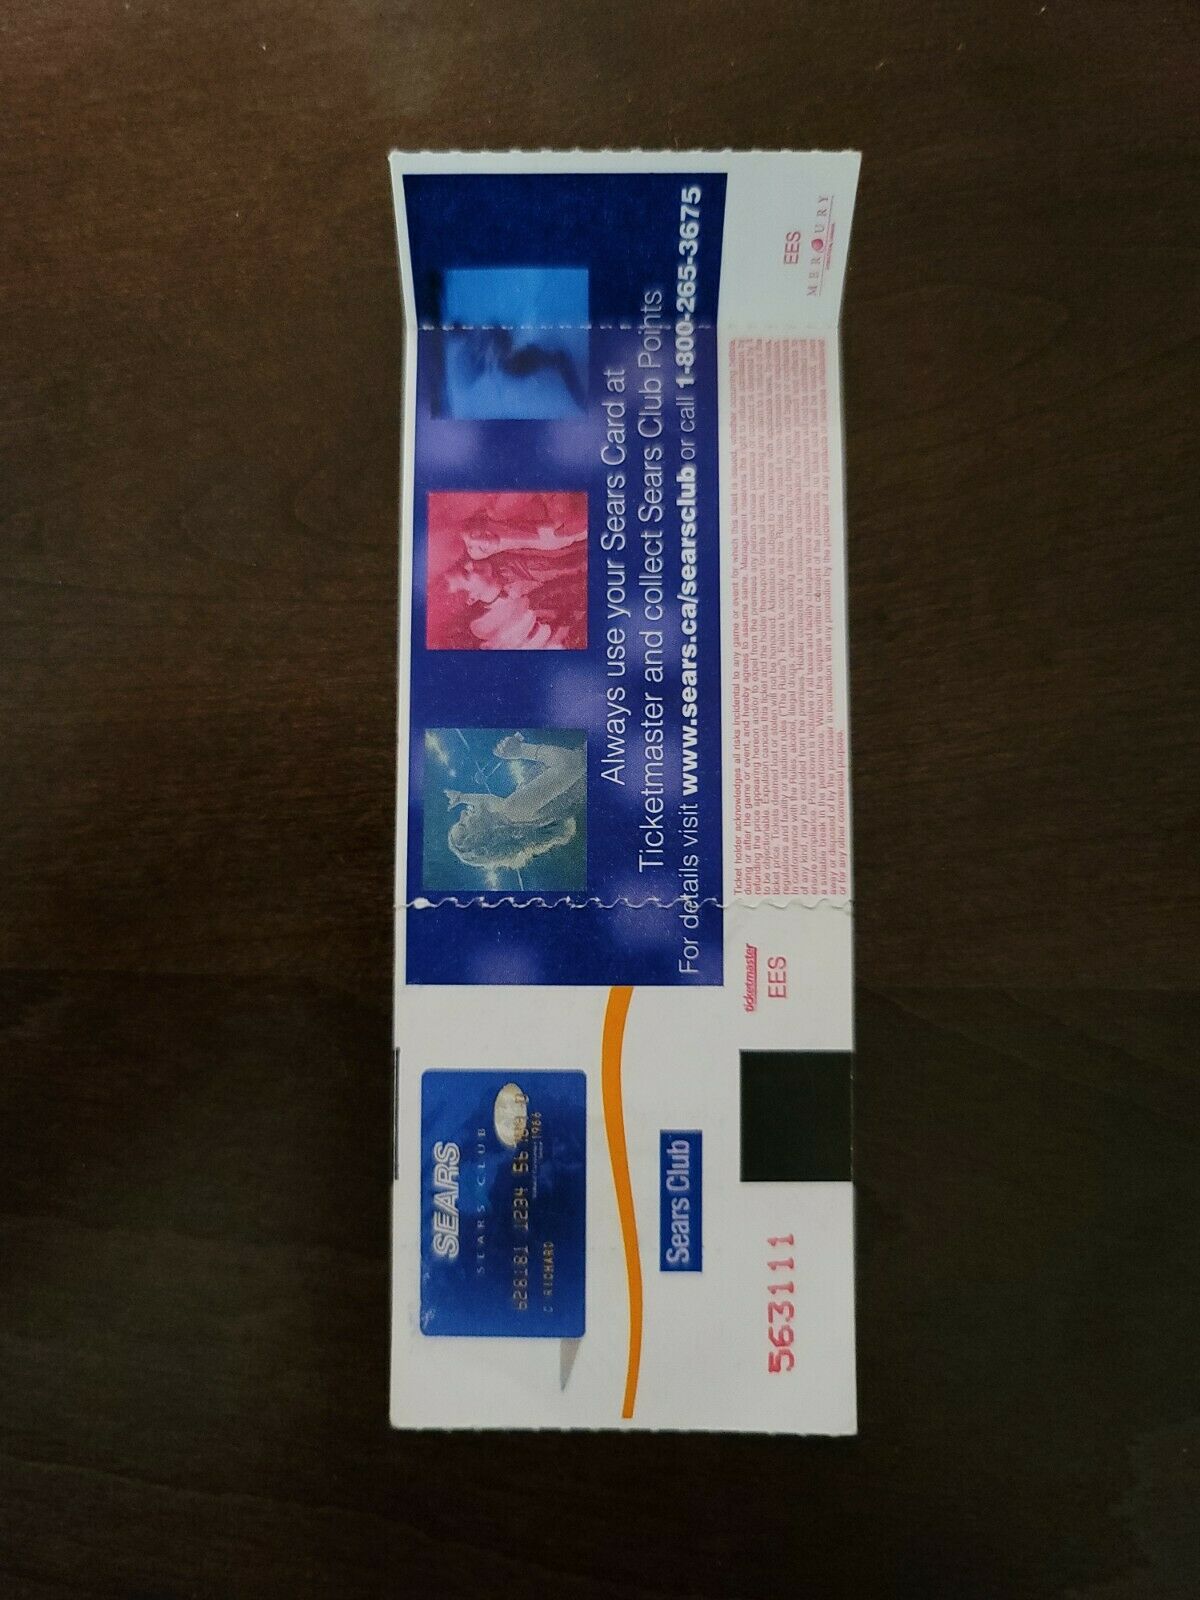 Def Leppard 2007 Toronto Molson Amphitheater Original Concert Ticket Stub